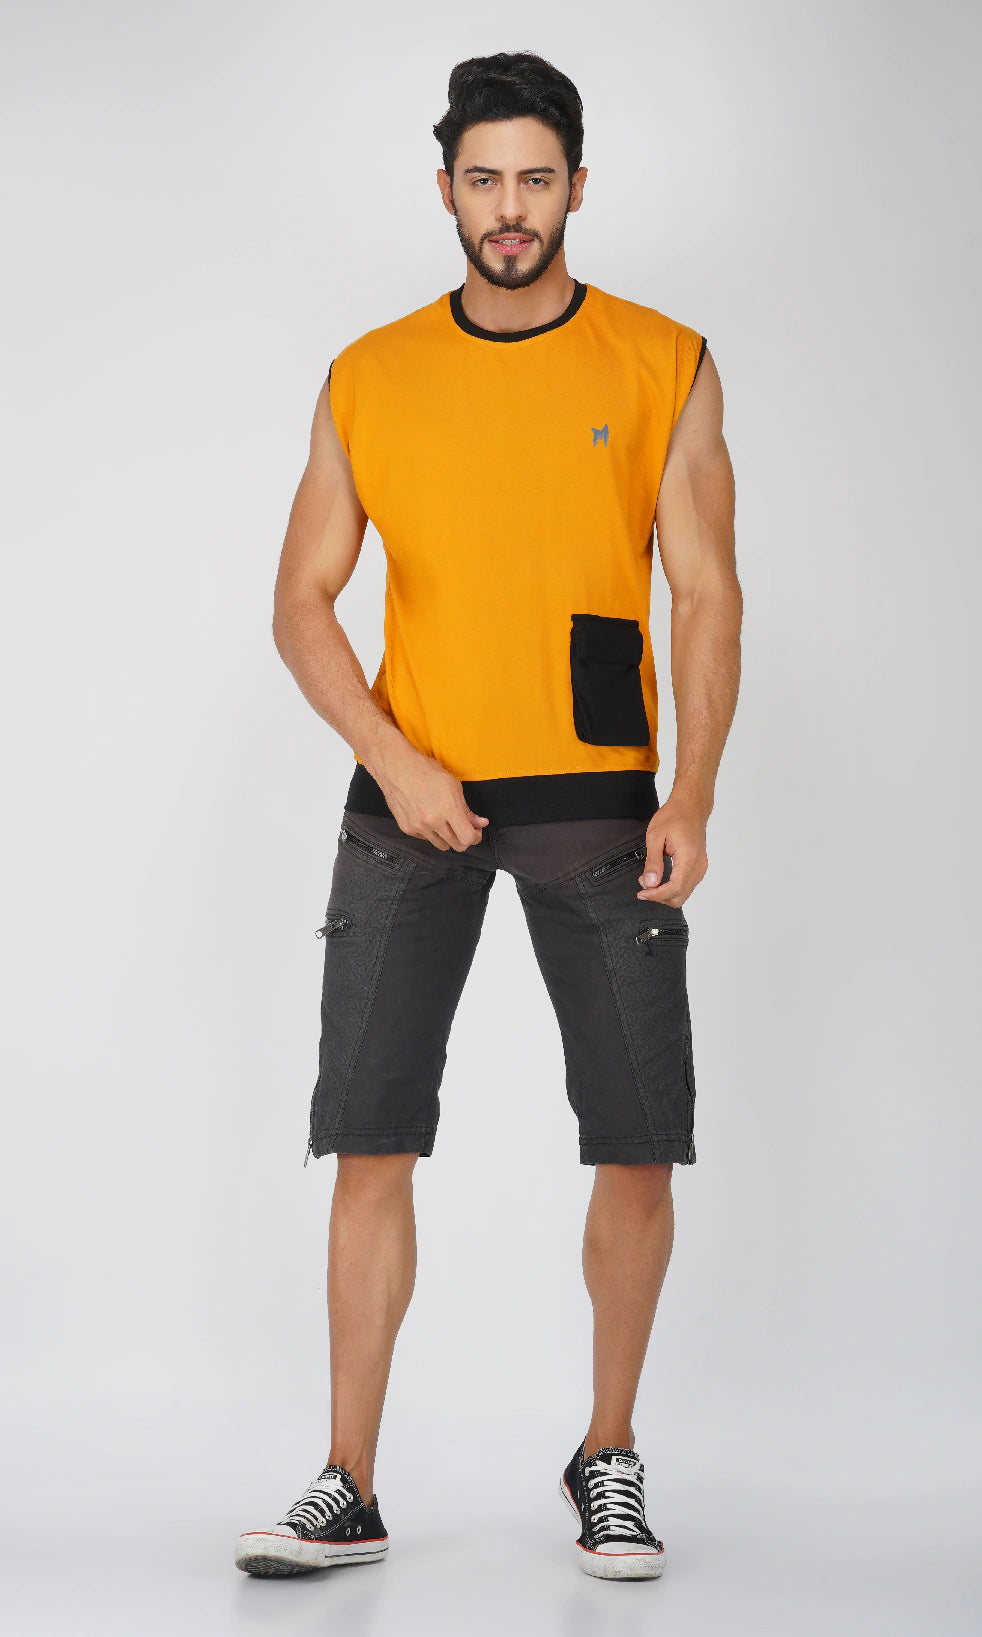 Mebadass ColorBlocked OverSized Mens Vests - Mustard Yellow & Black